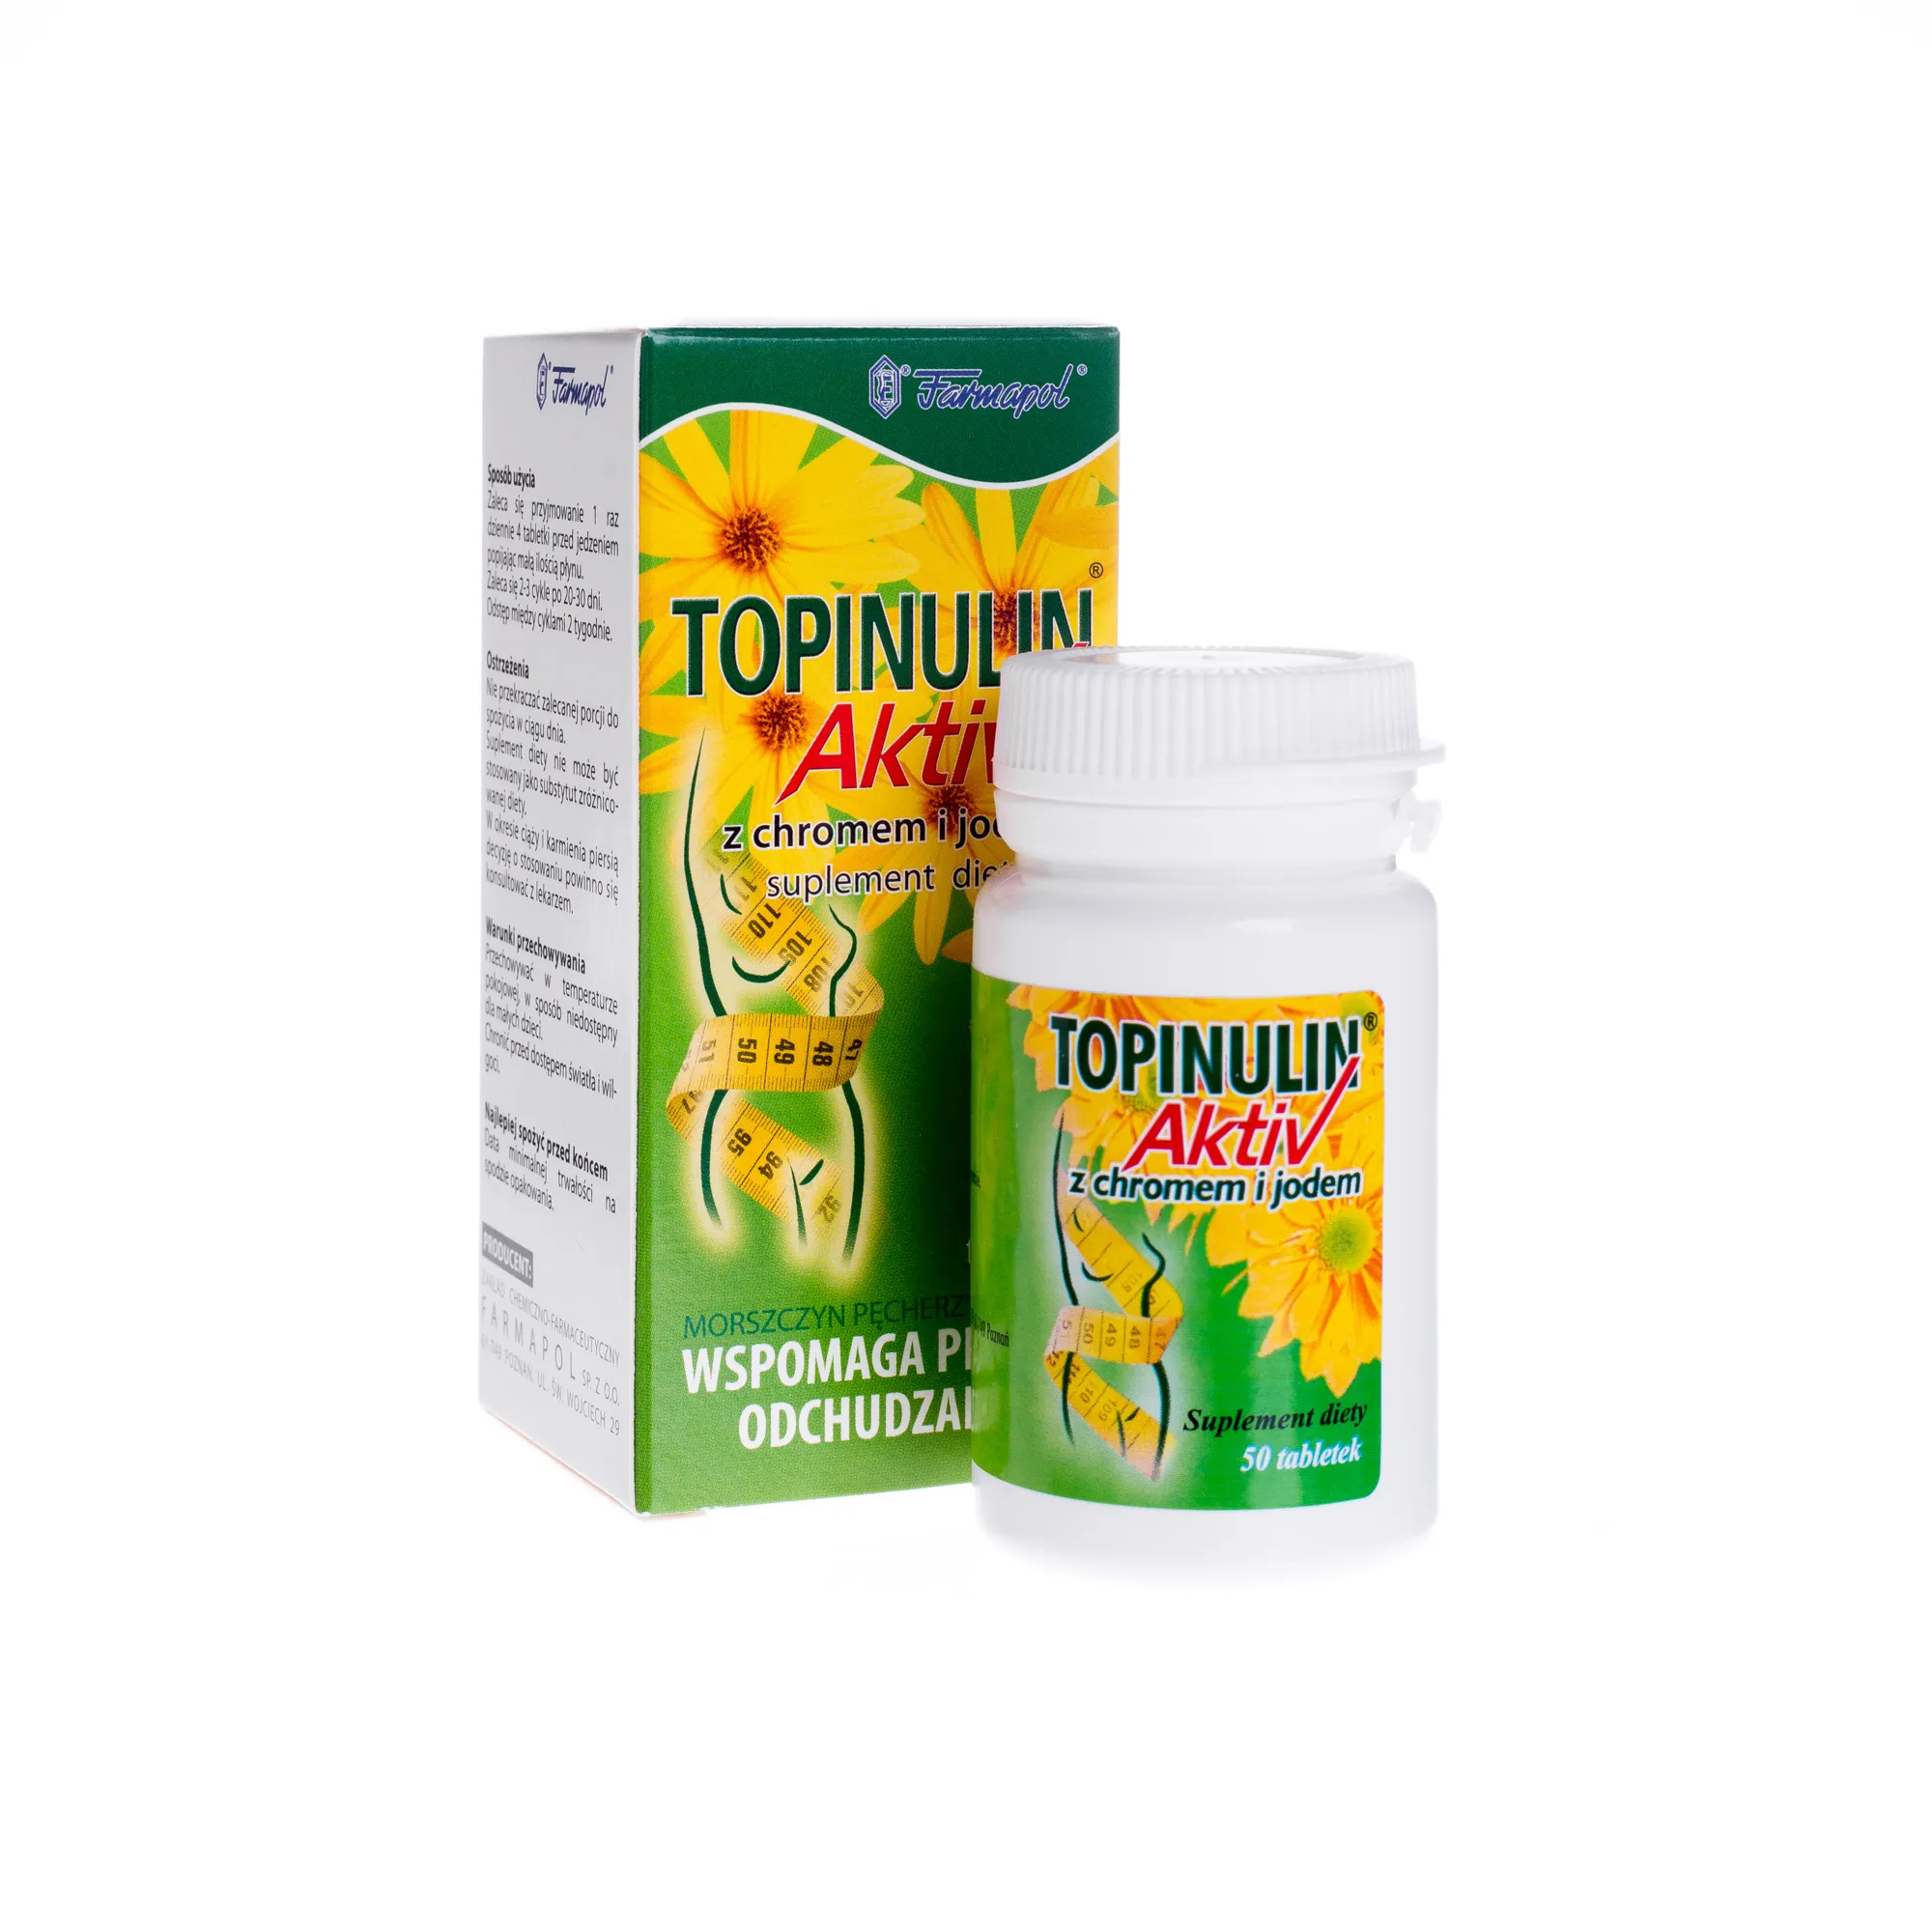 Topinulin Aktiv, z chromem i jodem, suplement diety, 50 tabletek